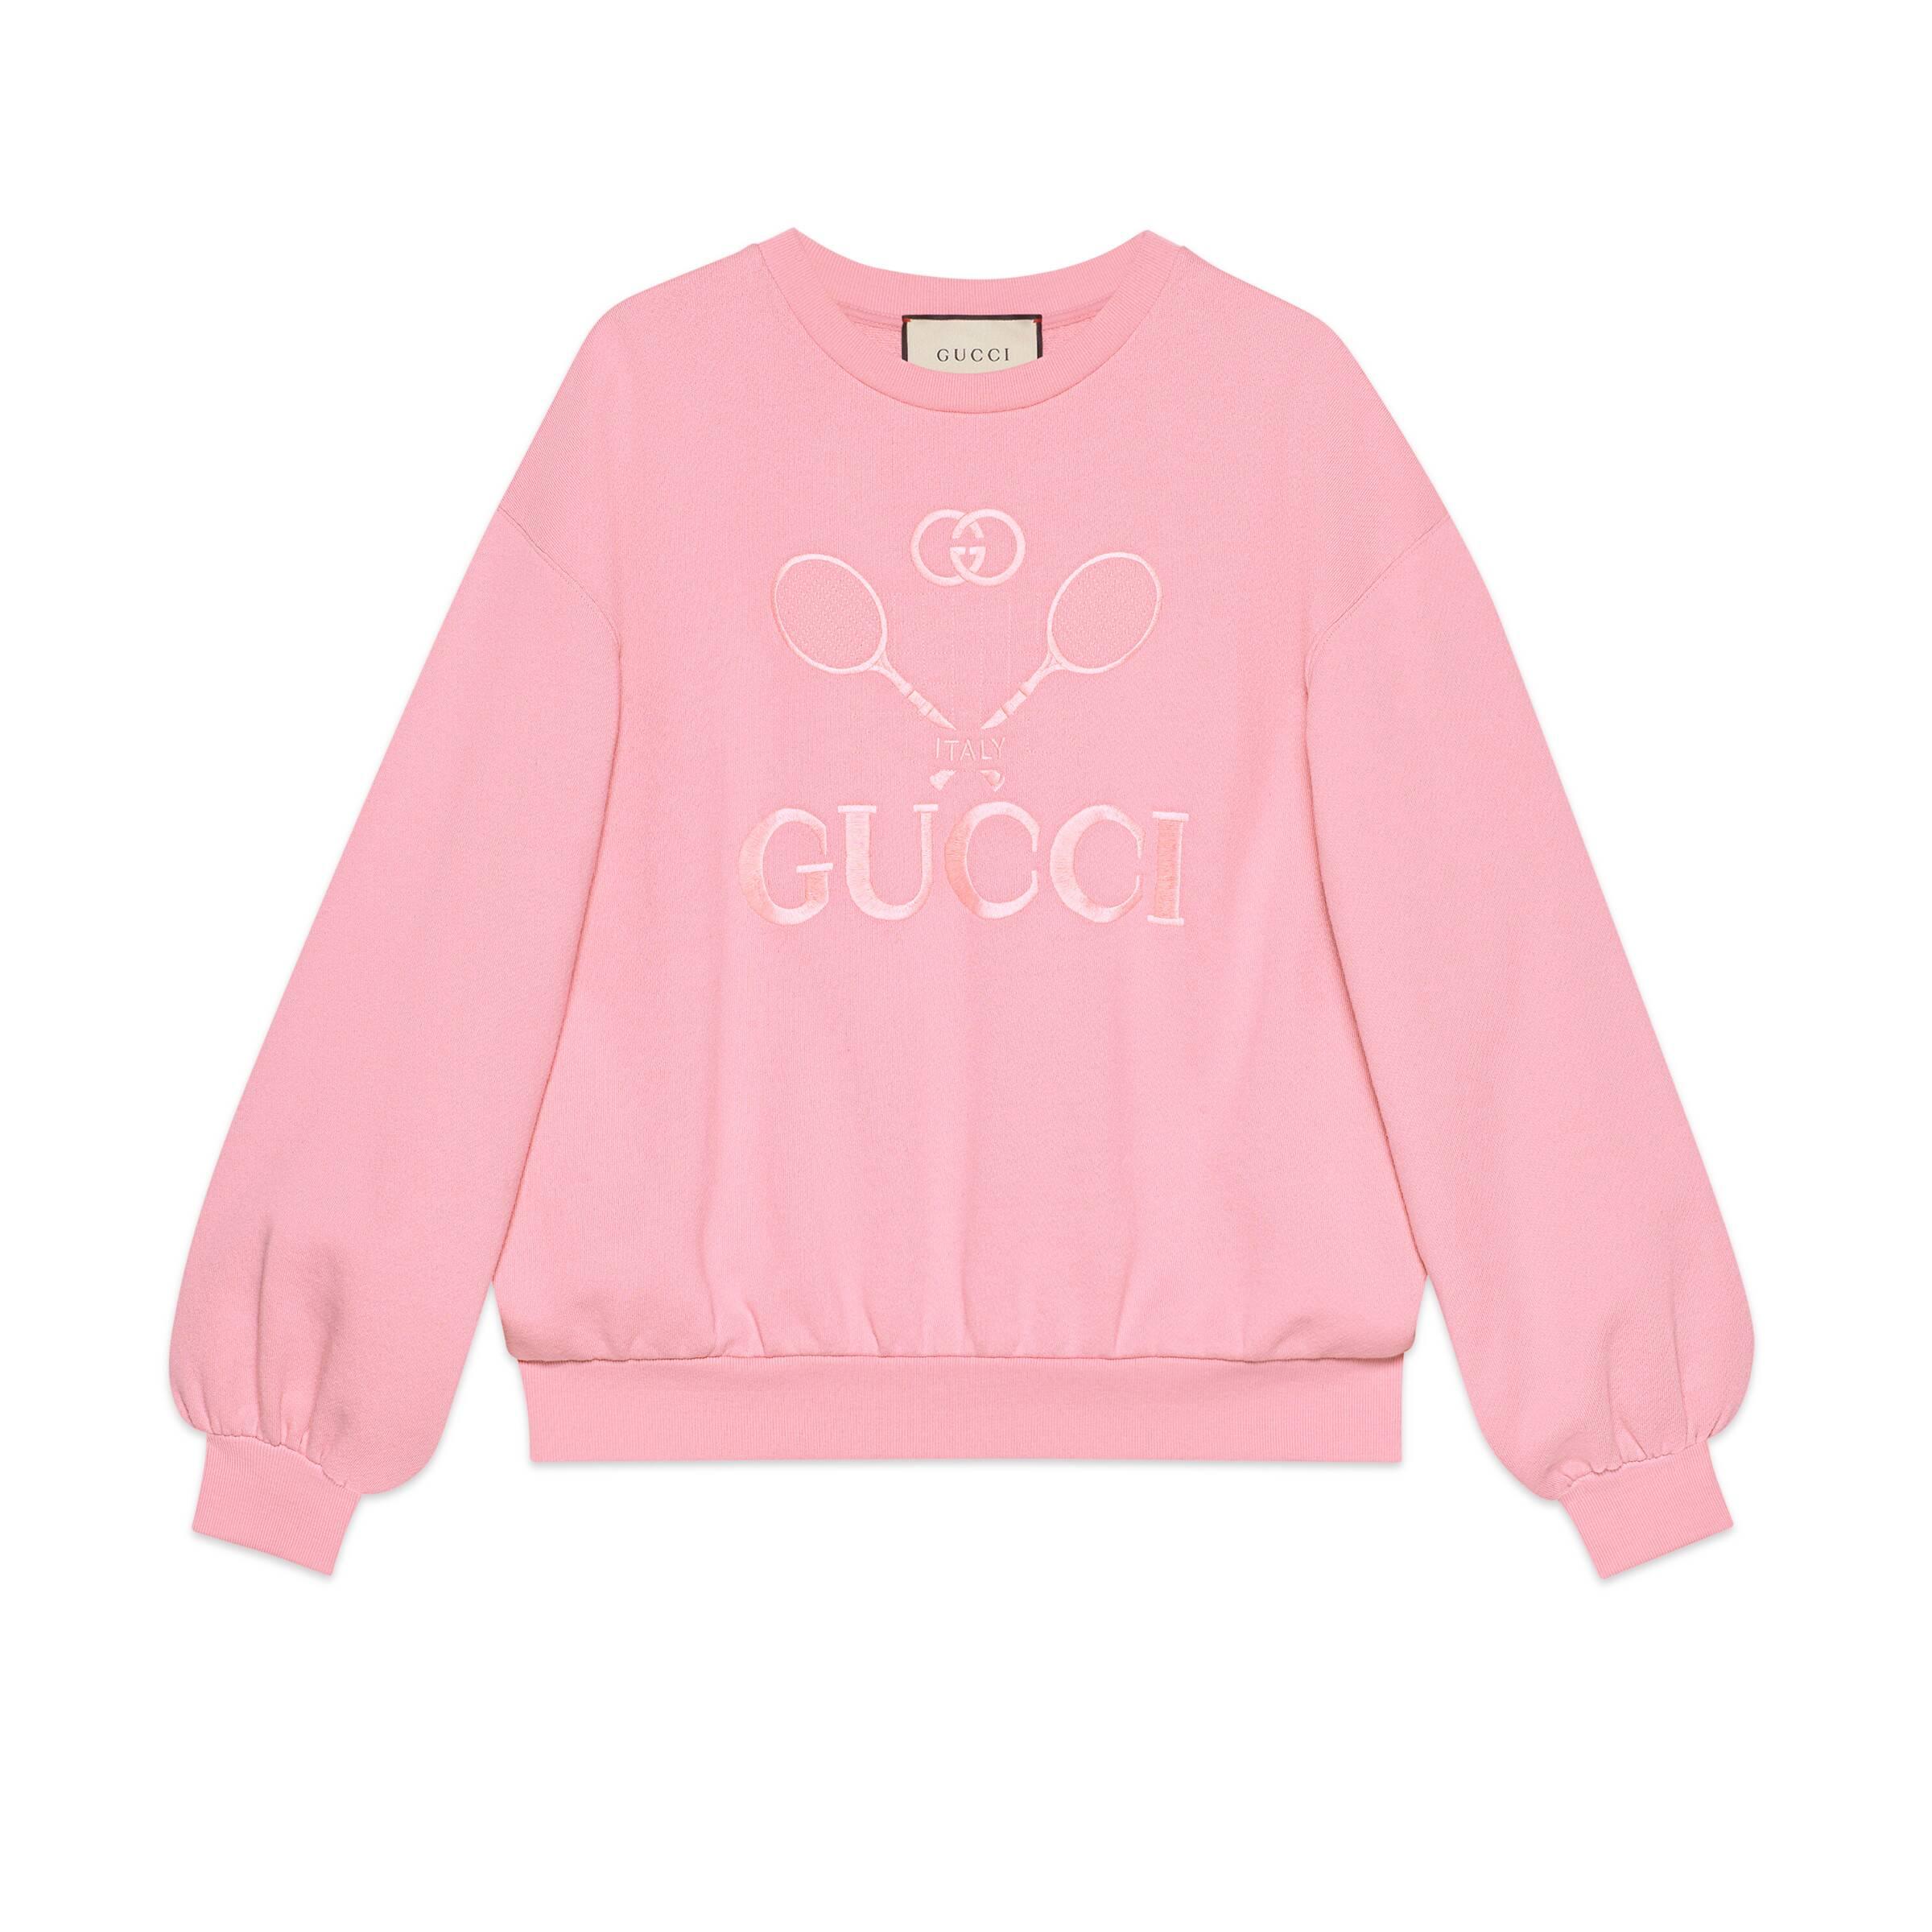 Petulance vertrouwen poort Gucci Oversize Sweatshirt With Tennis in Pink | Lyst